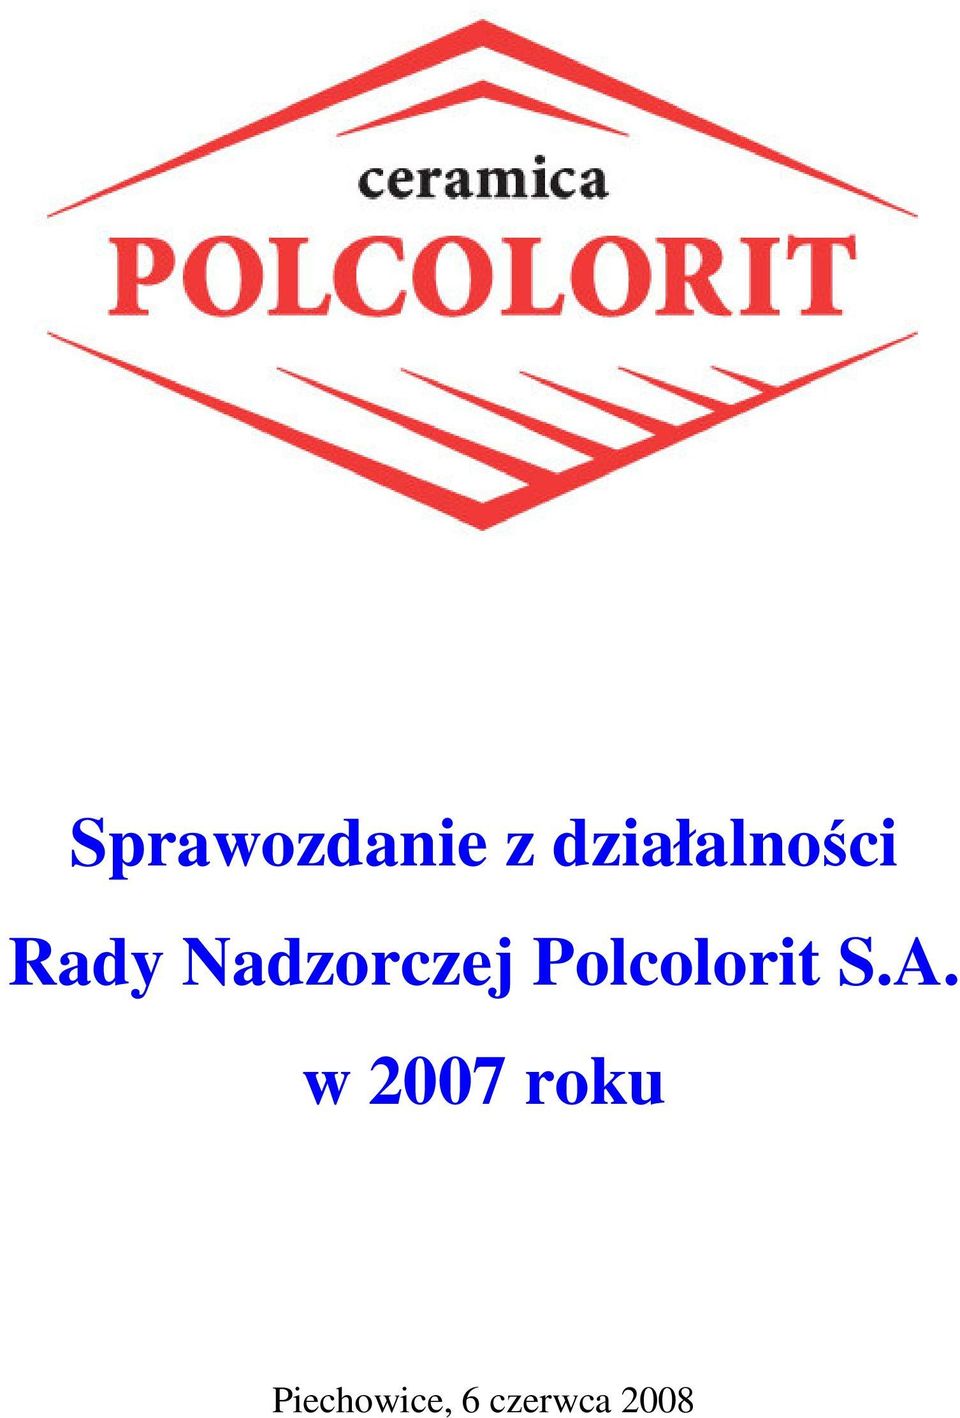 Nadzorczej Polcolorit S.